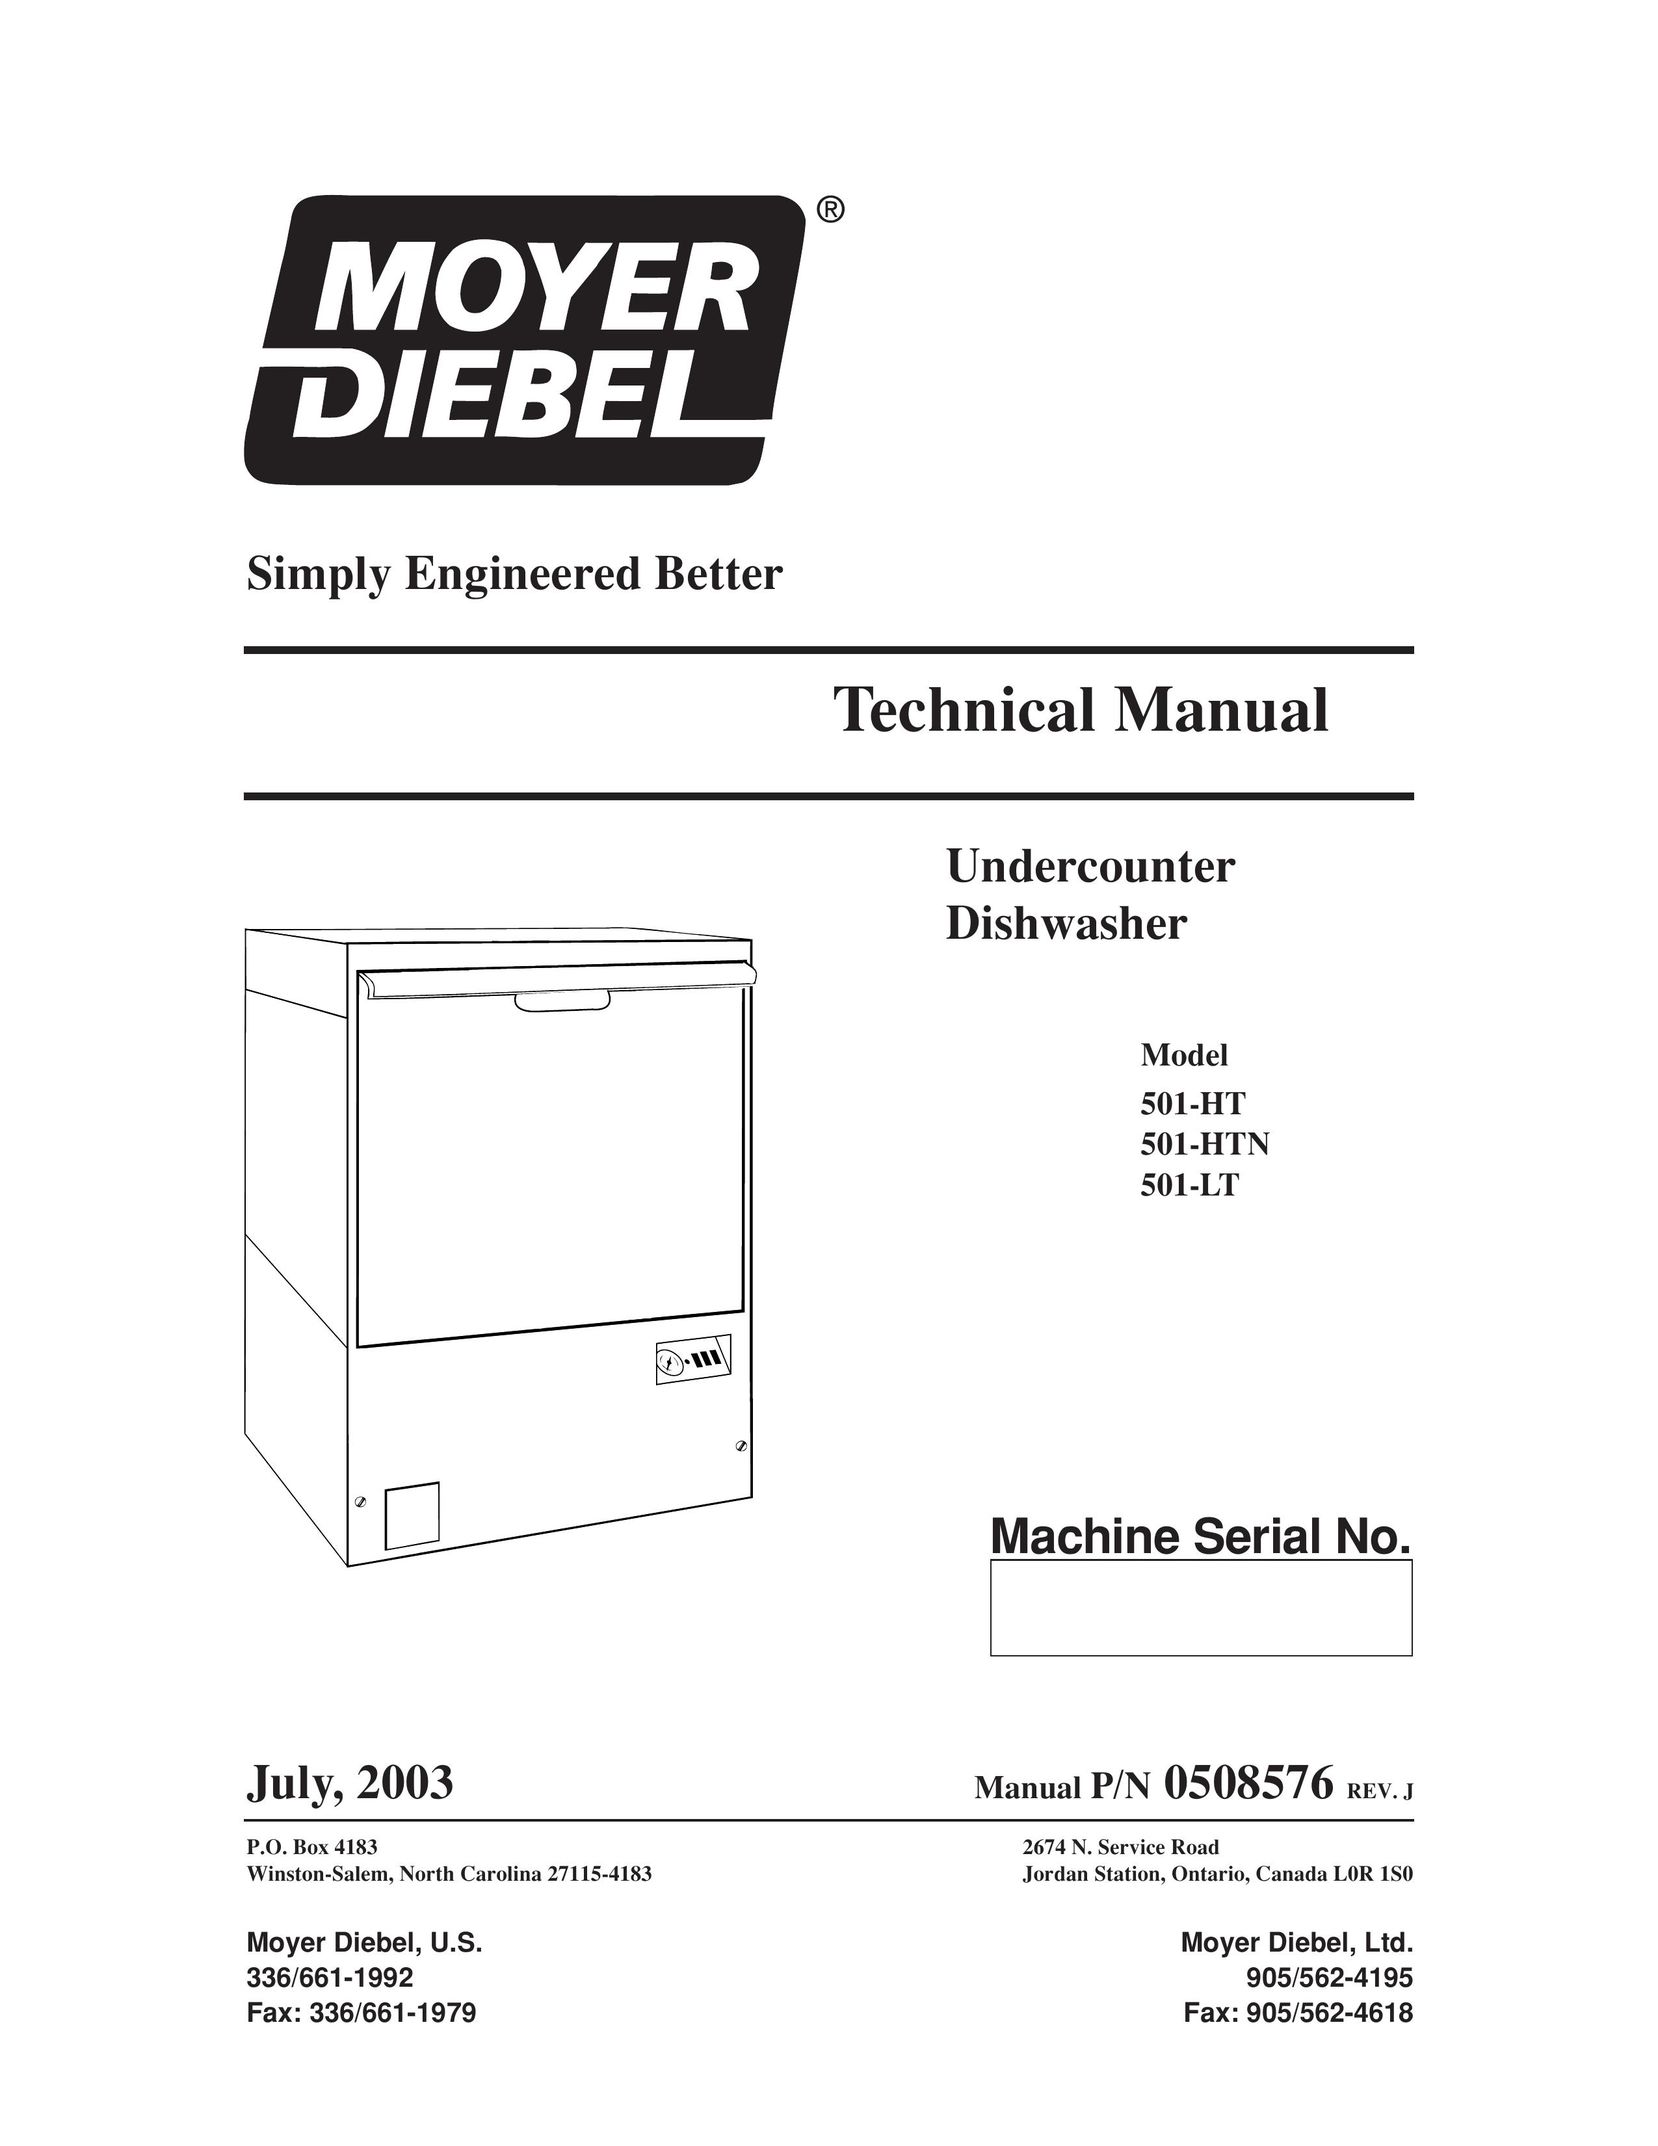 Moyer Diebel 501-HT Dishwasher User Manual